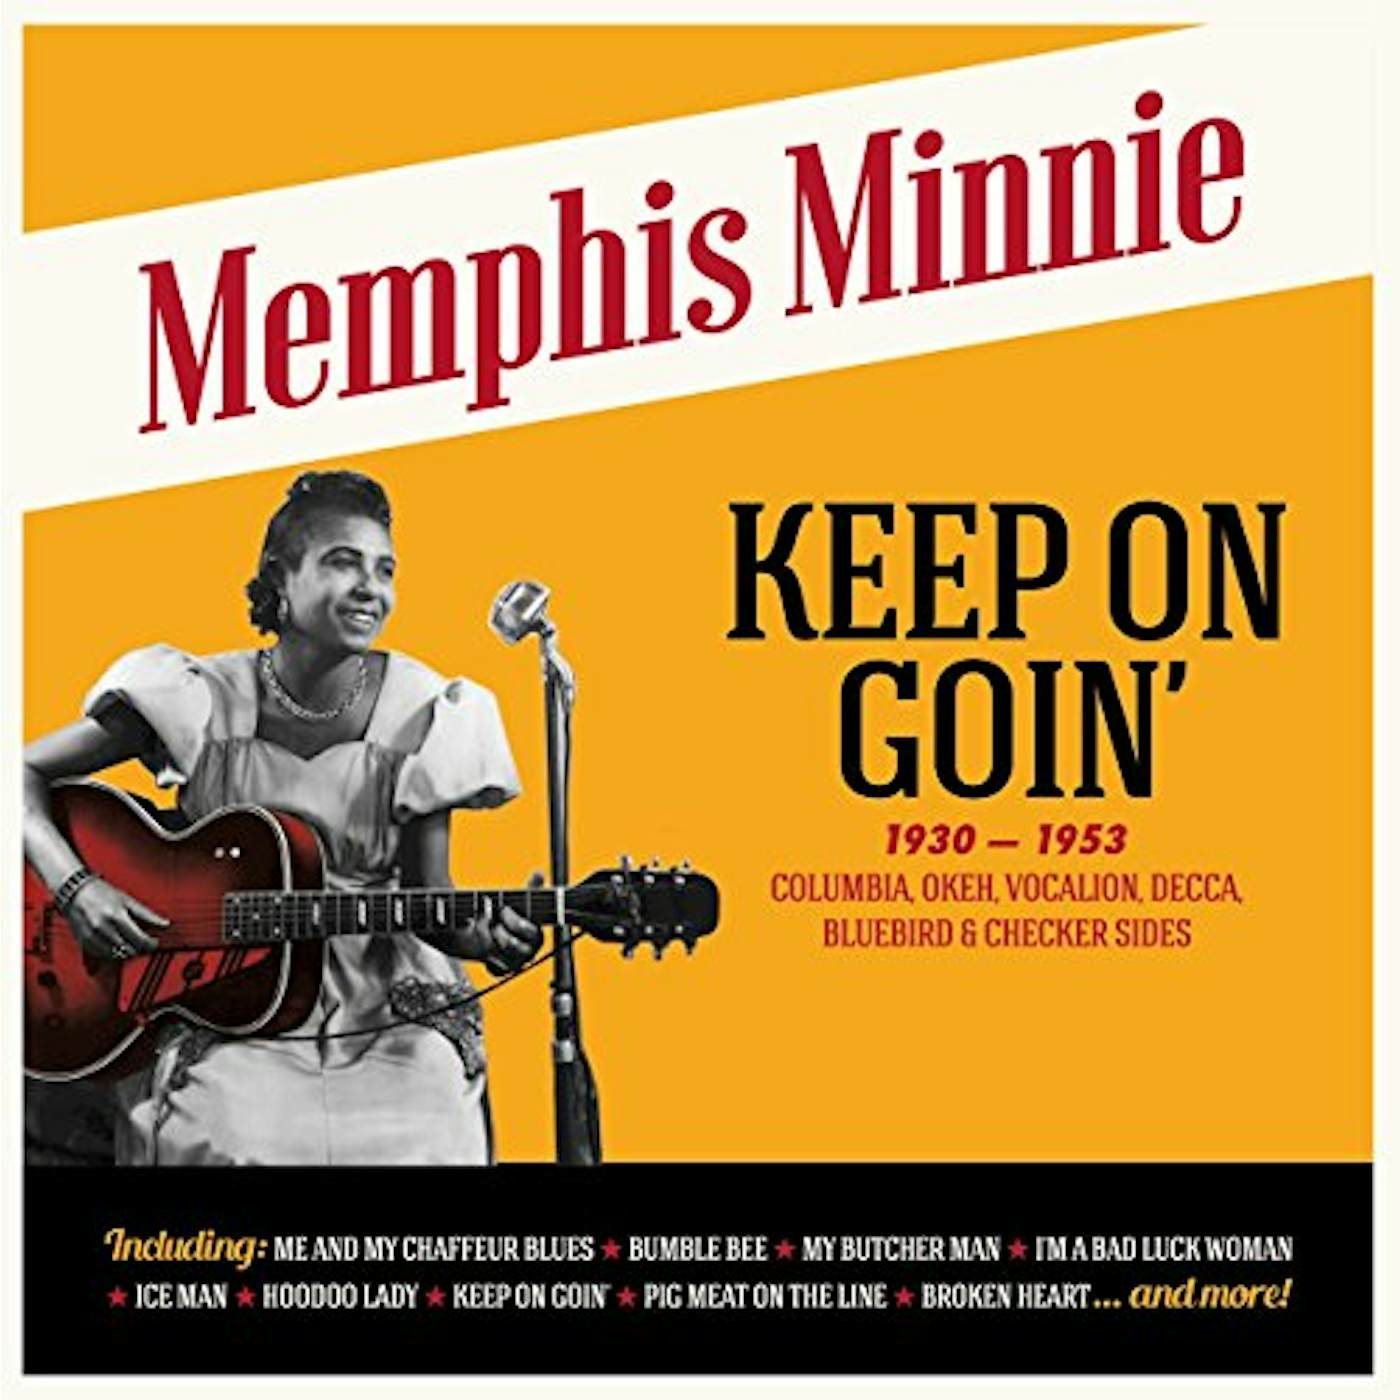 Memphis Minnie KEEP ON GOIN (COLUMBIA OKEH VOCALION DECCA) Vinyl Record